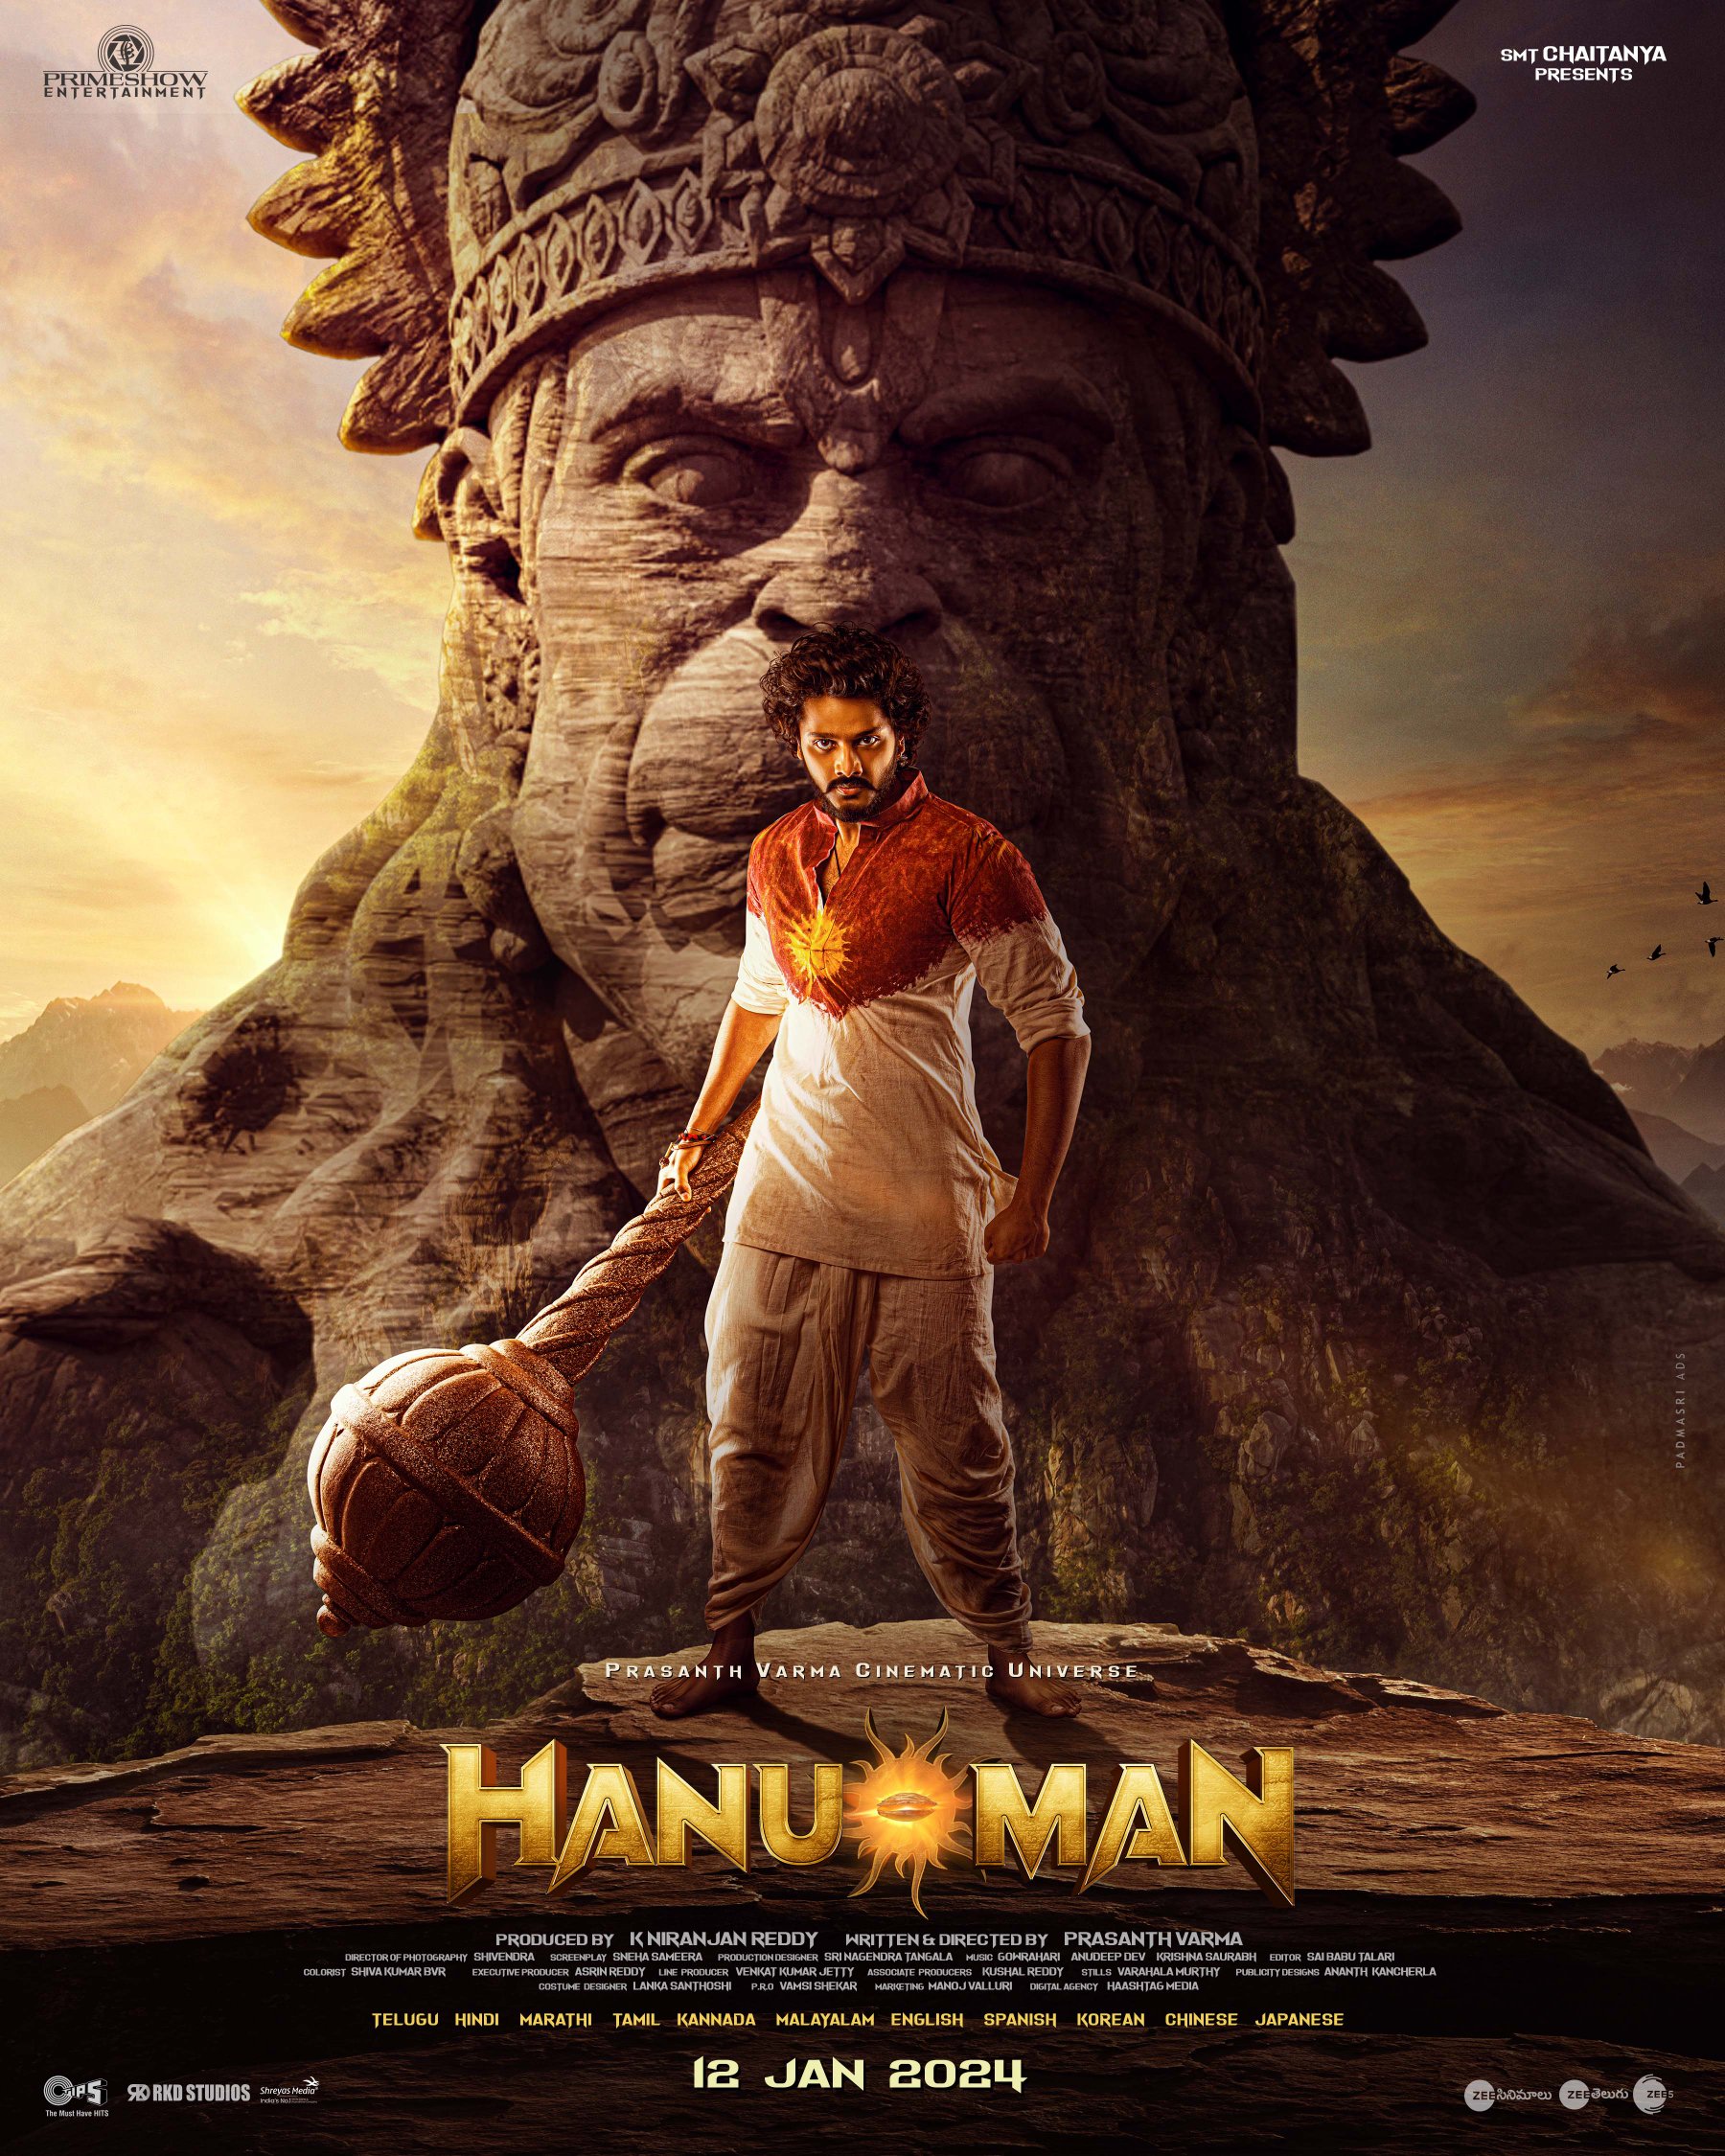 HanuMan Movie First Day’s Share in Both Telugu States